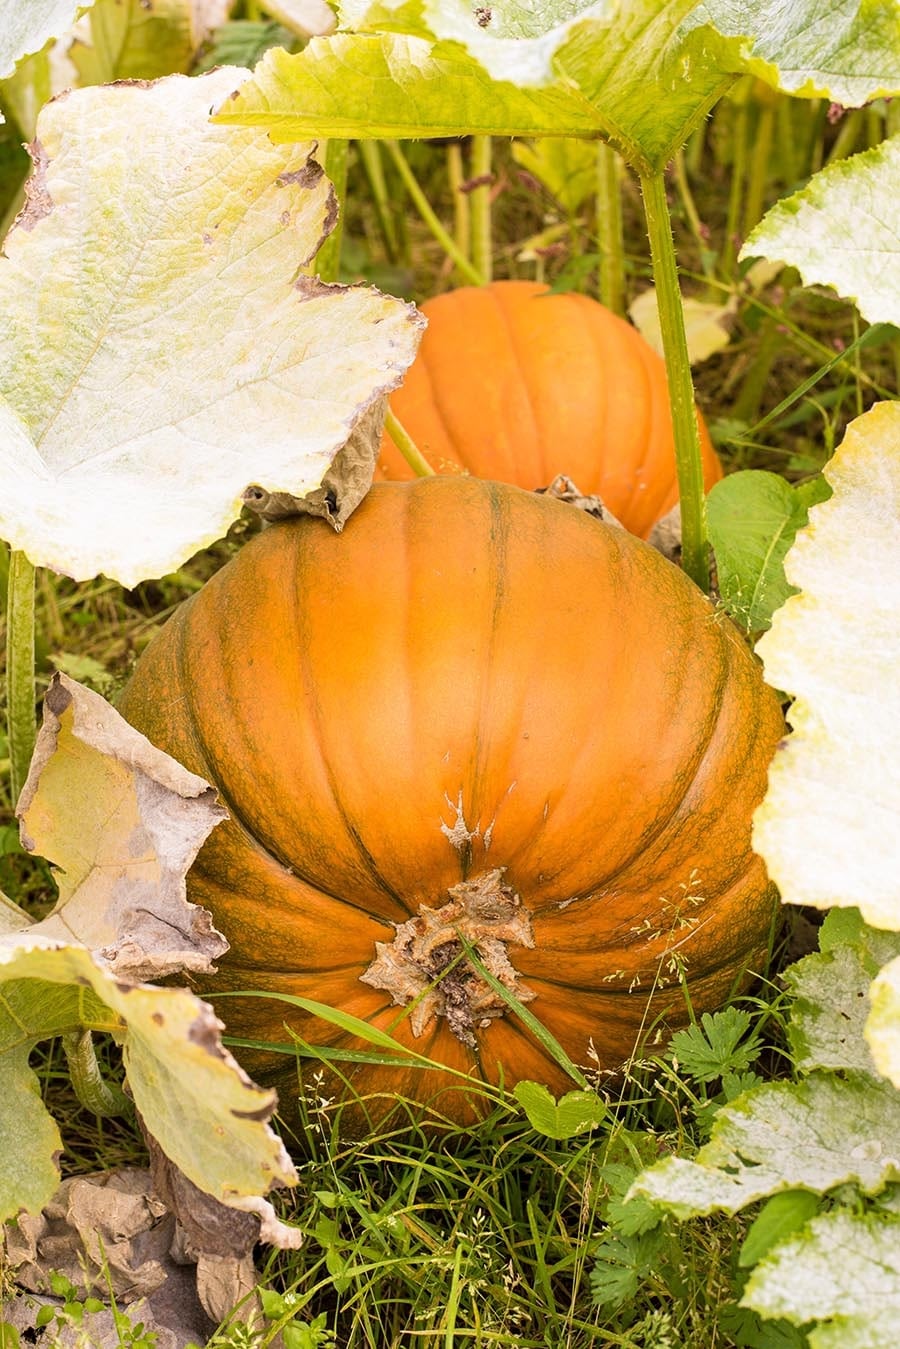 A large pumpkin in a field